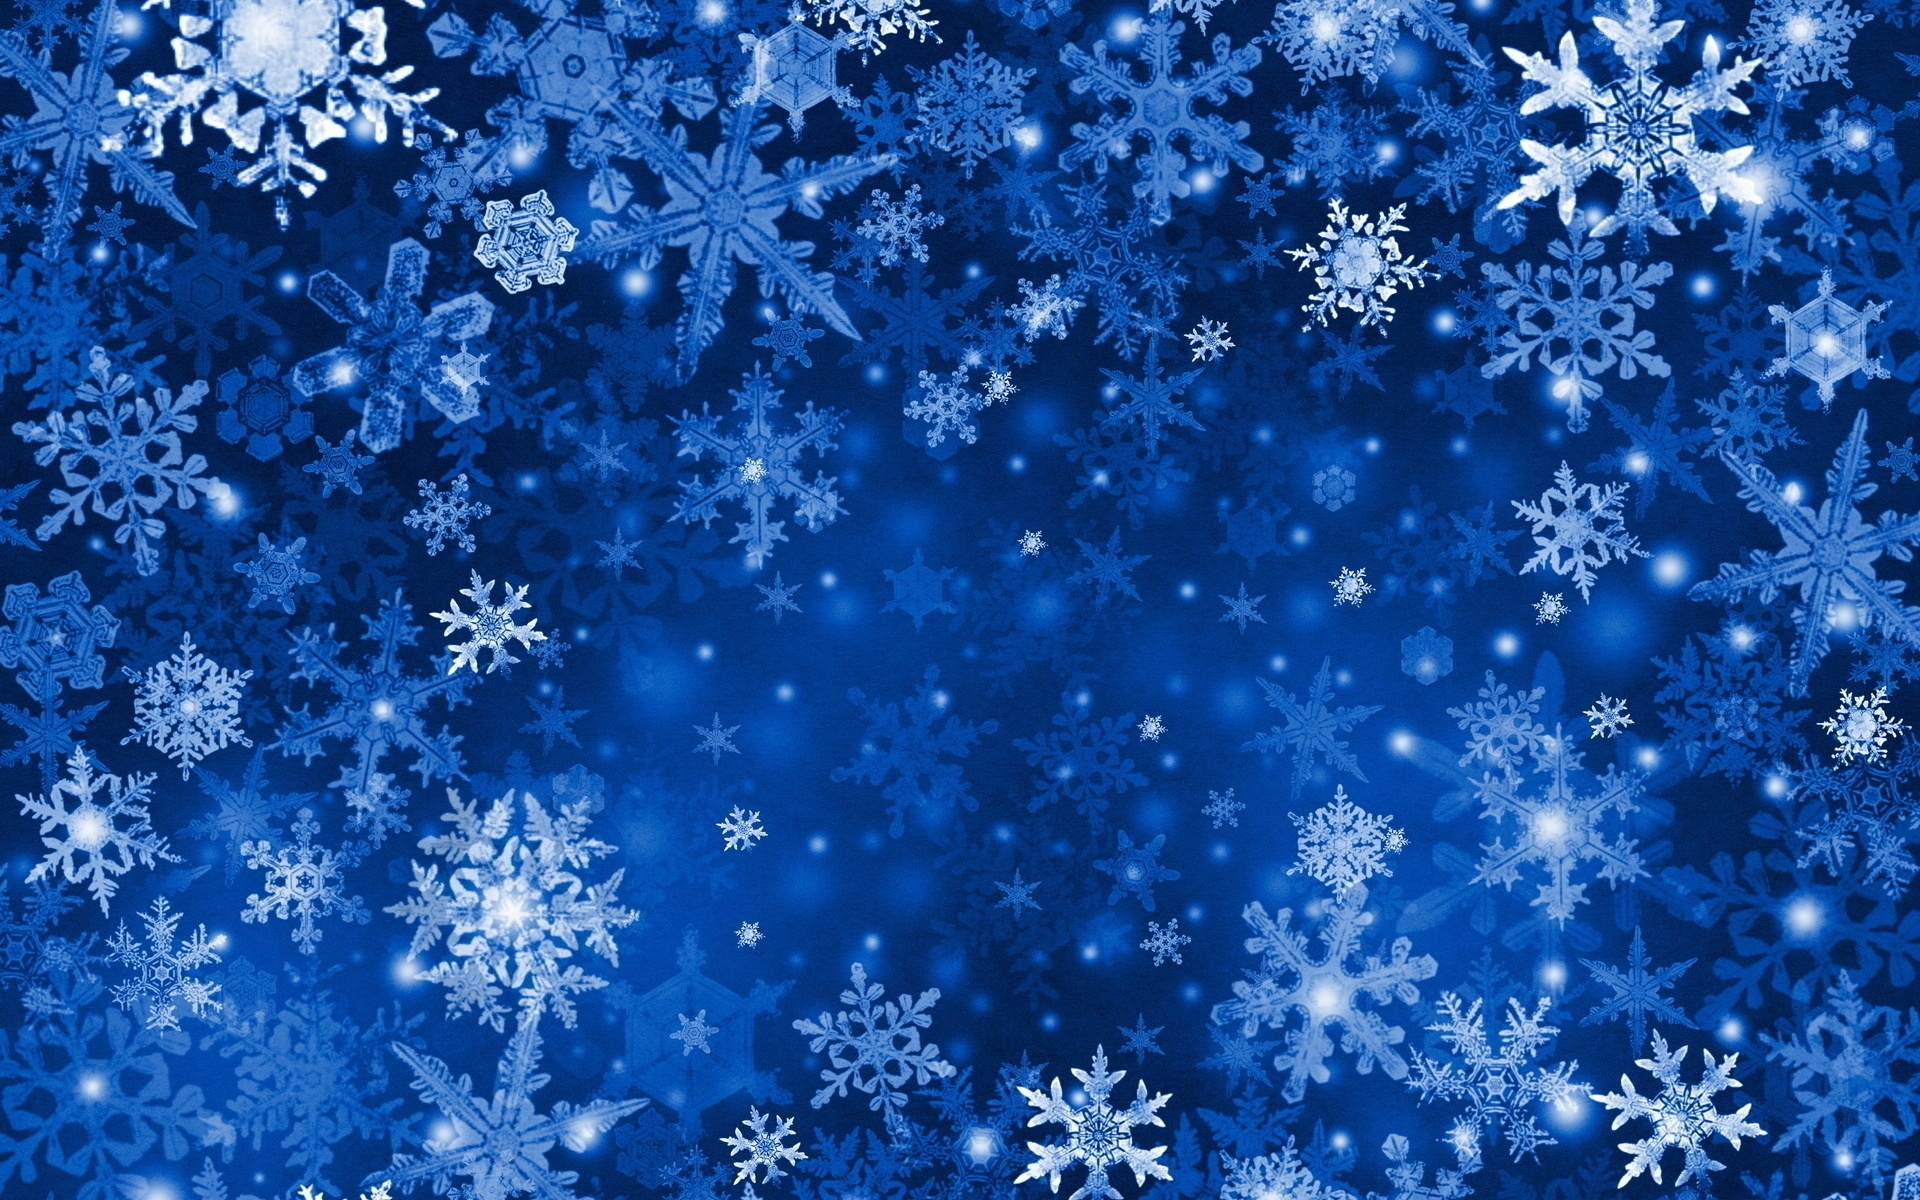 Snowflake Wallpaper Free - Uncalke.com